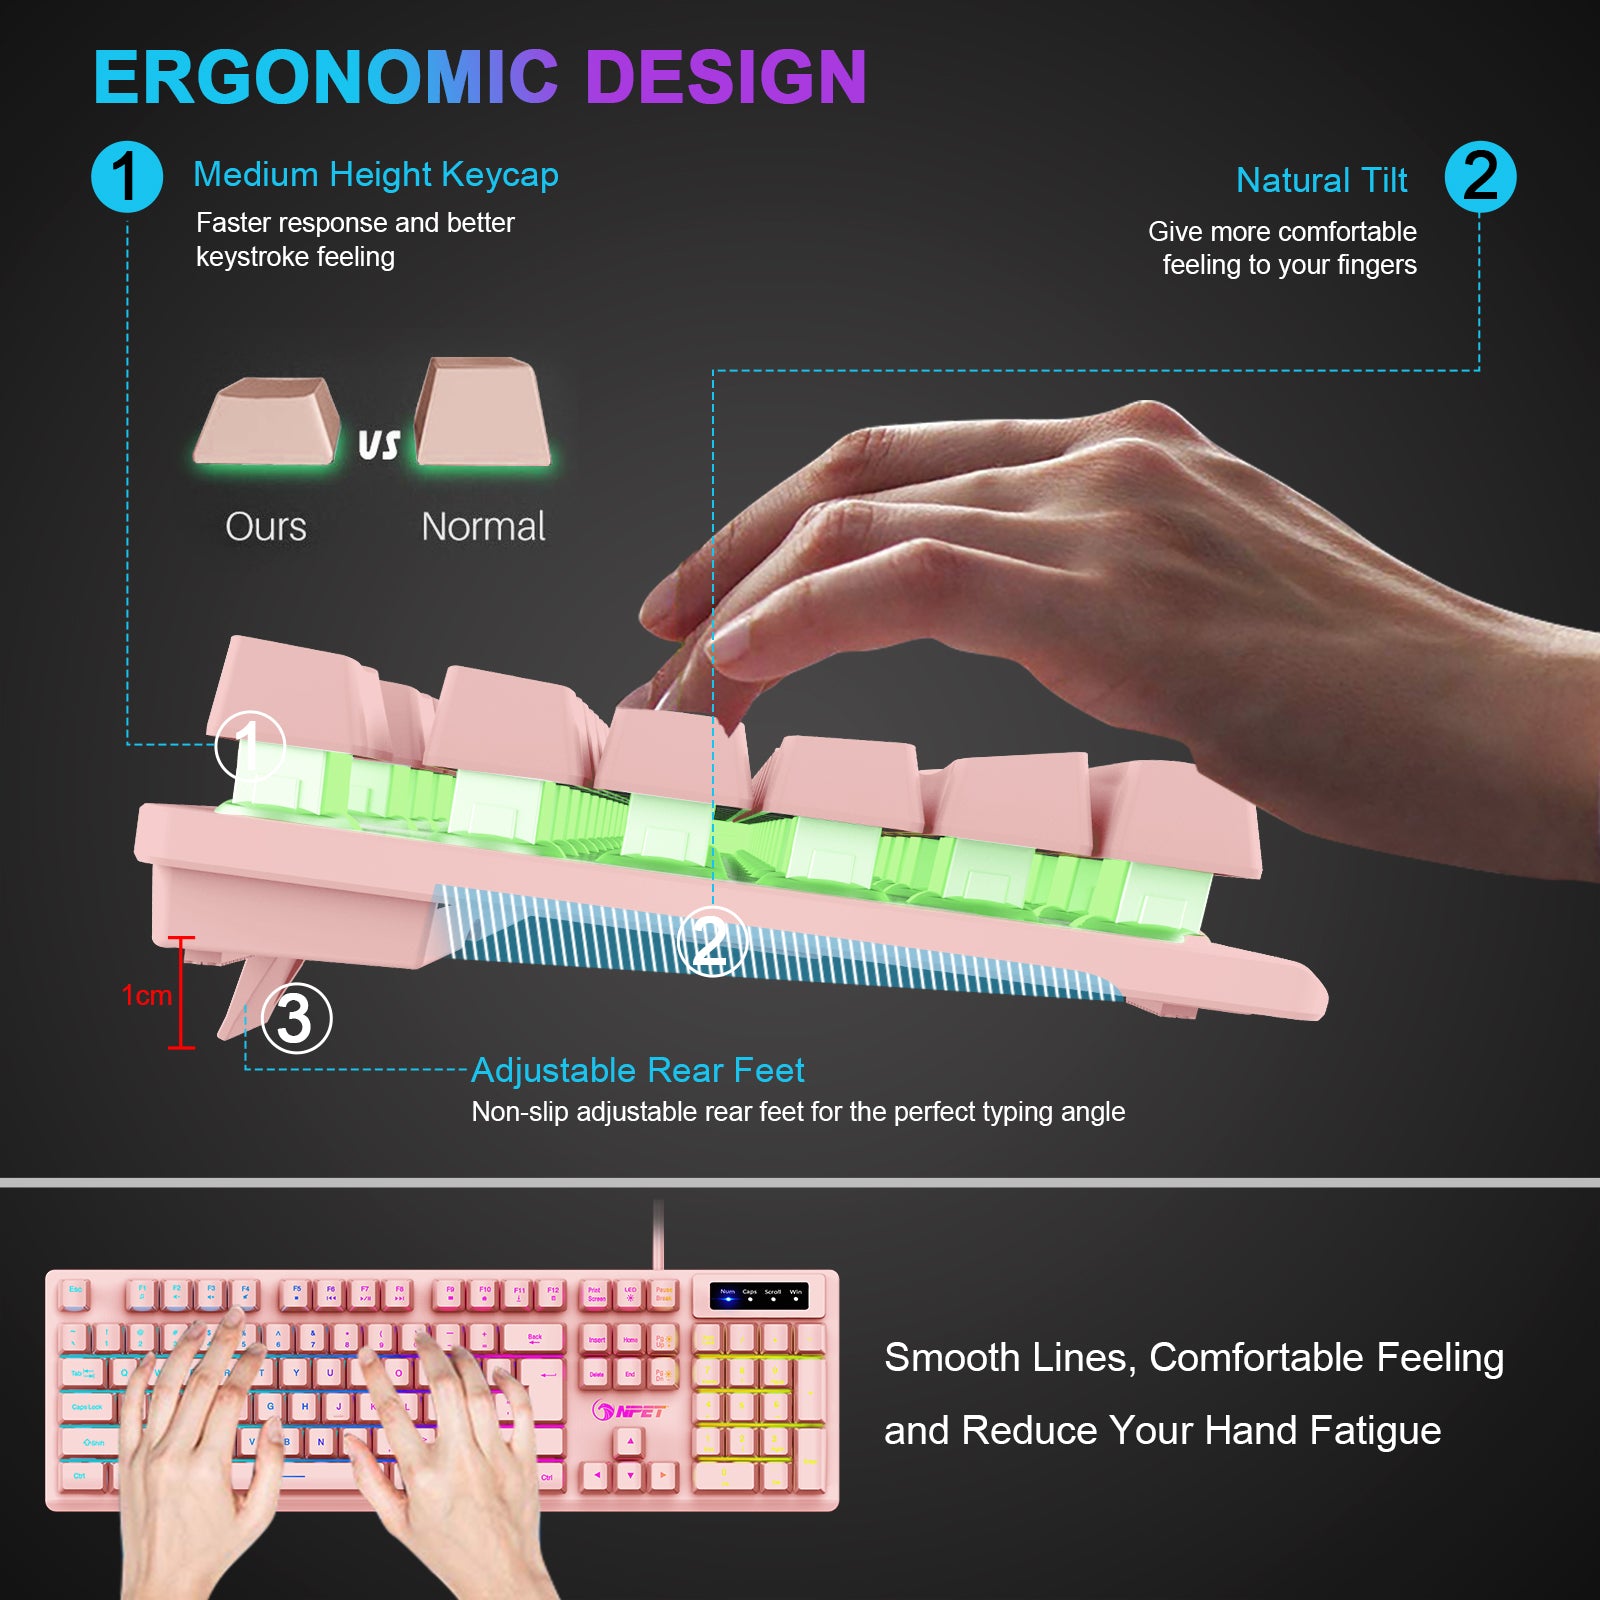 NPET K10 Backlit Gaming Keyboard, Pink